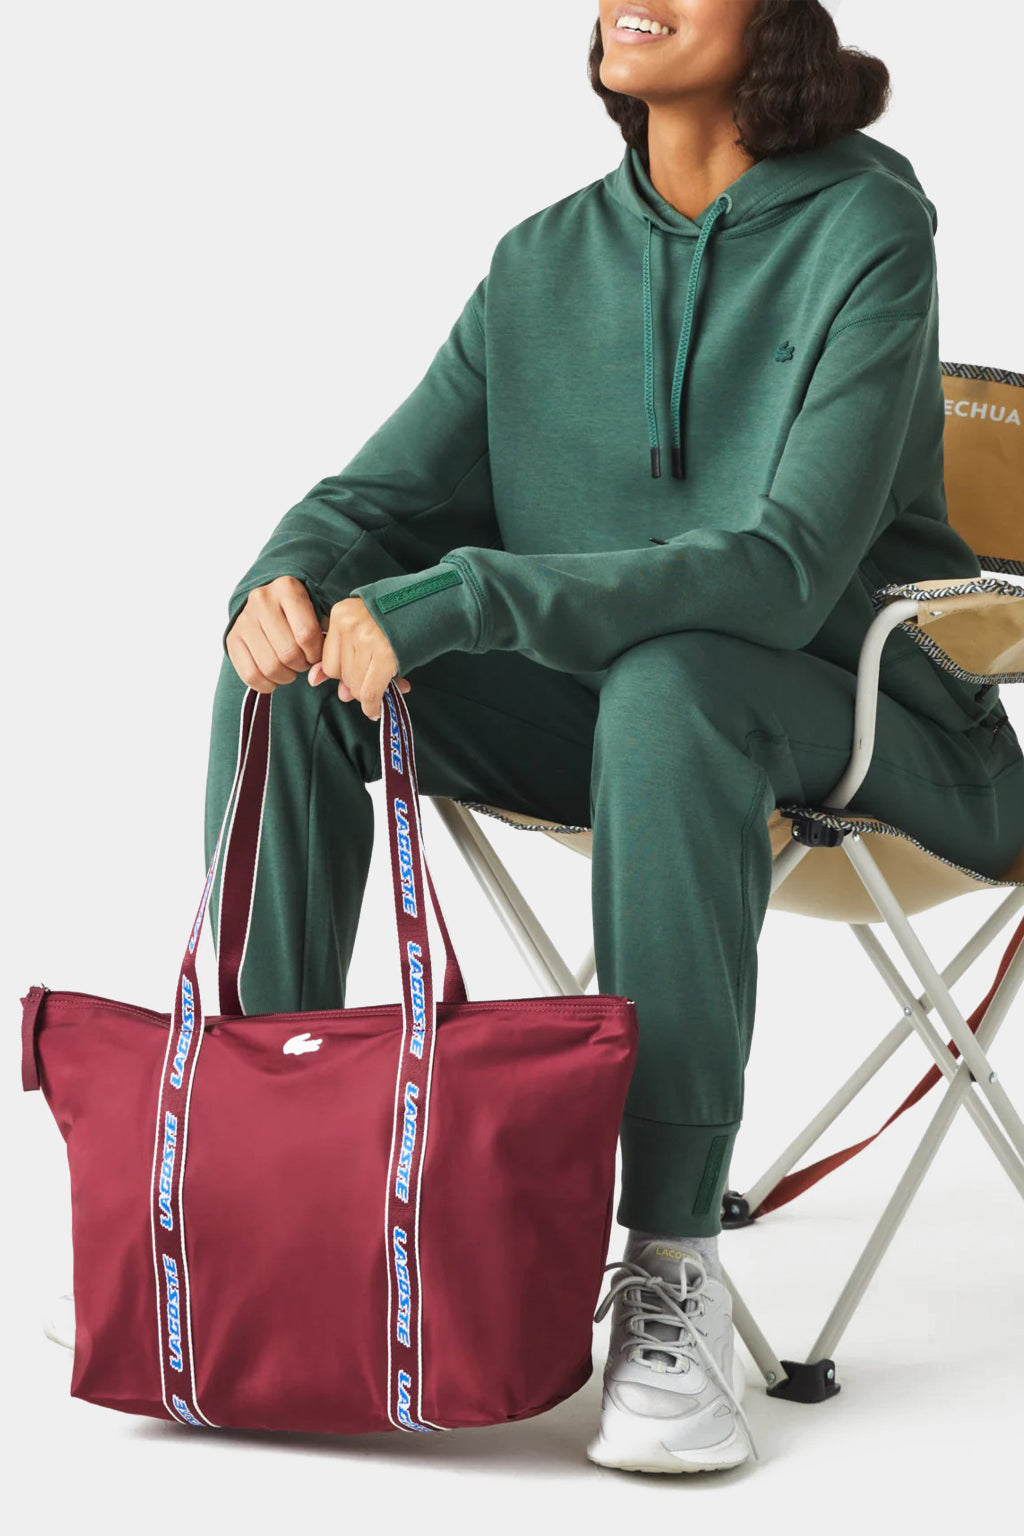 Lacoste - Color Block Branded Tote Bag